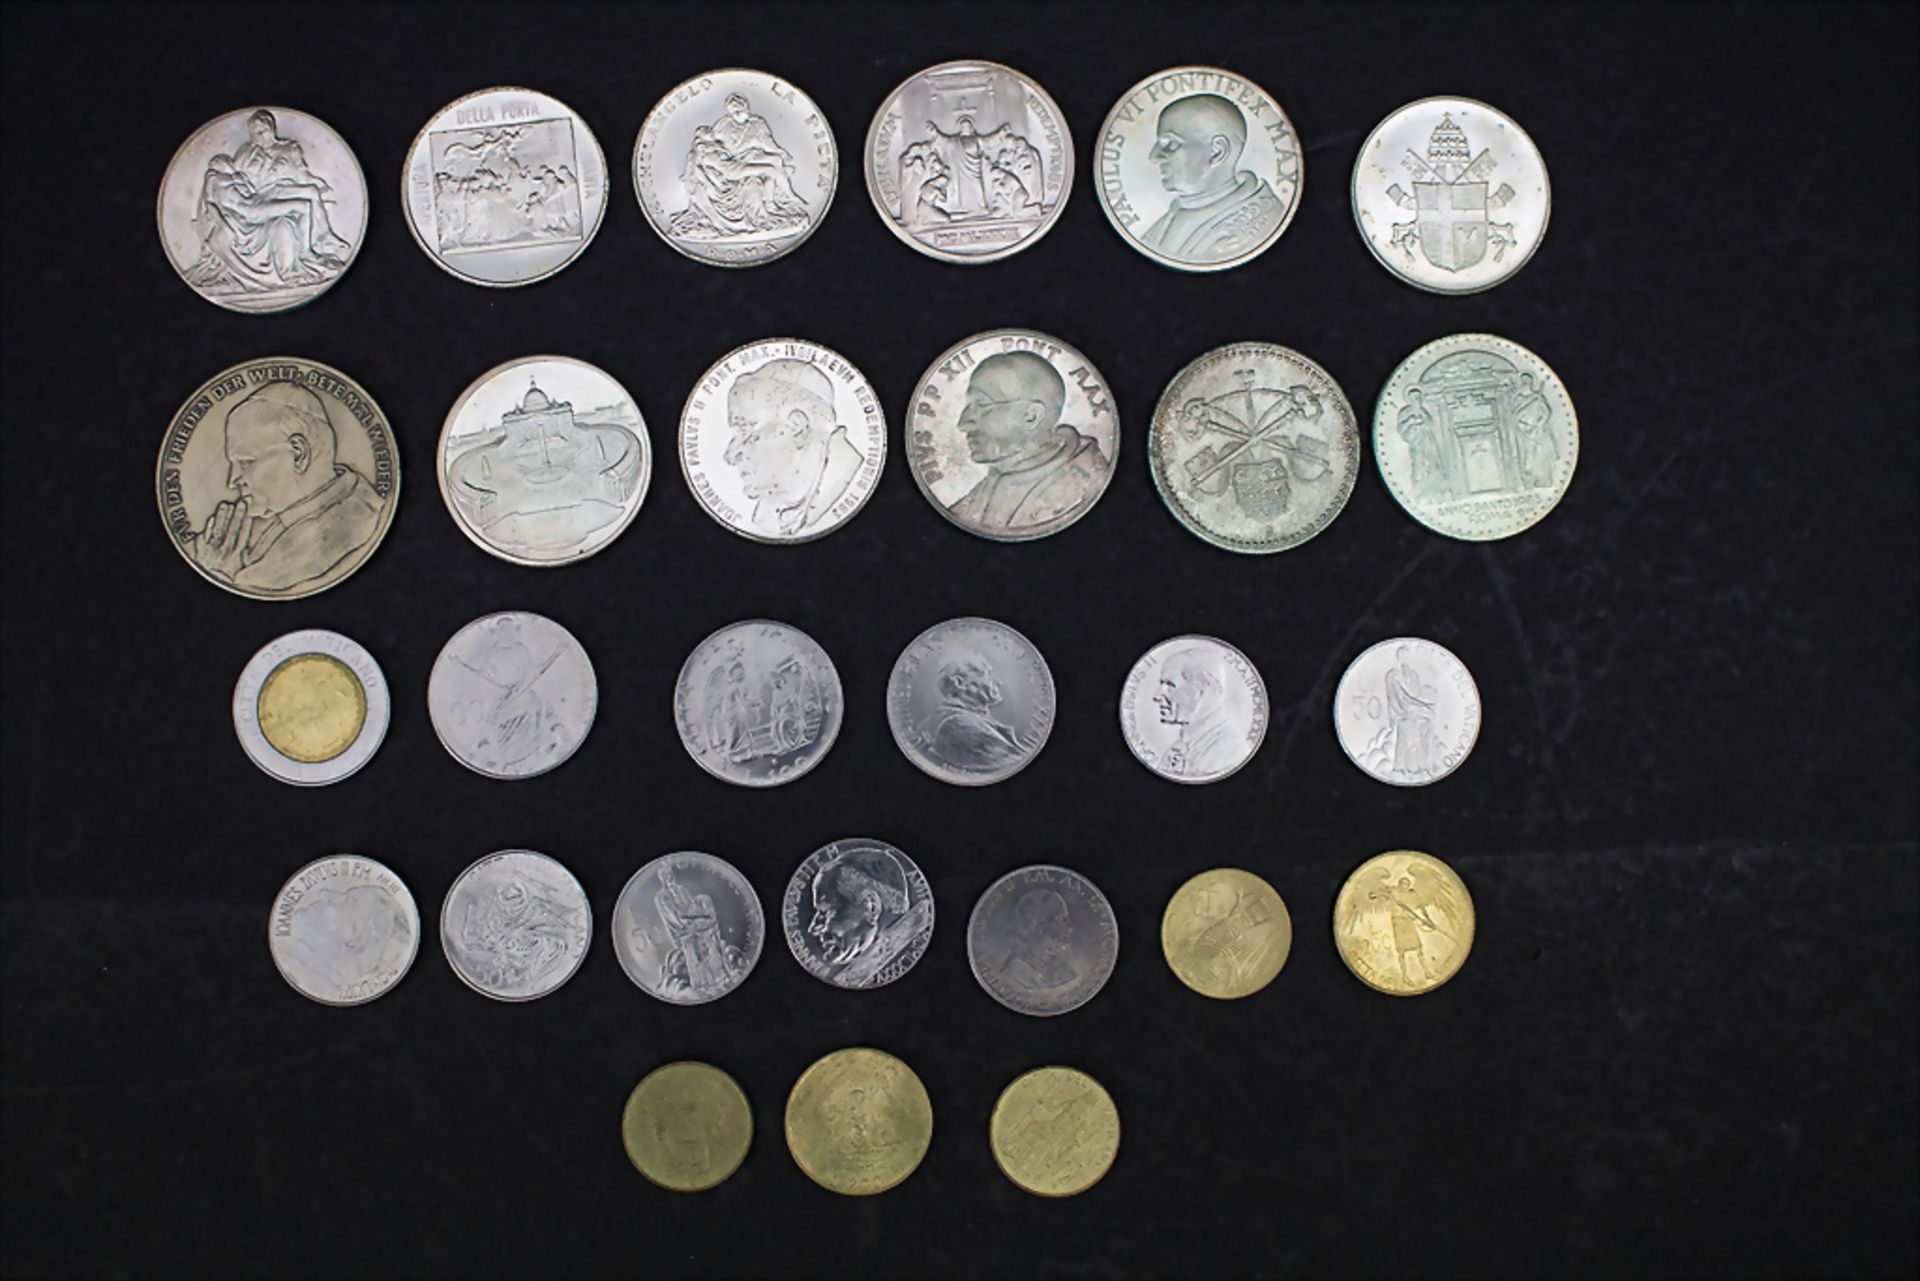 Sammlung Münzen und Medaillen des Vatikan / A collection of Vatican coins and medals